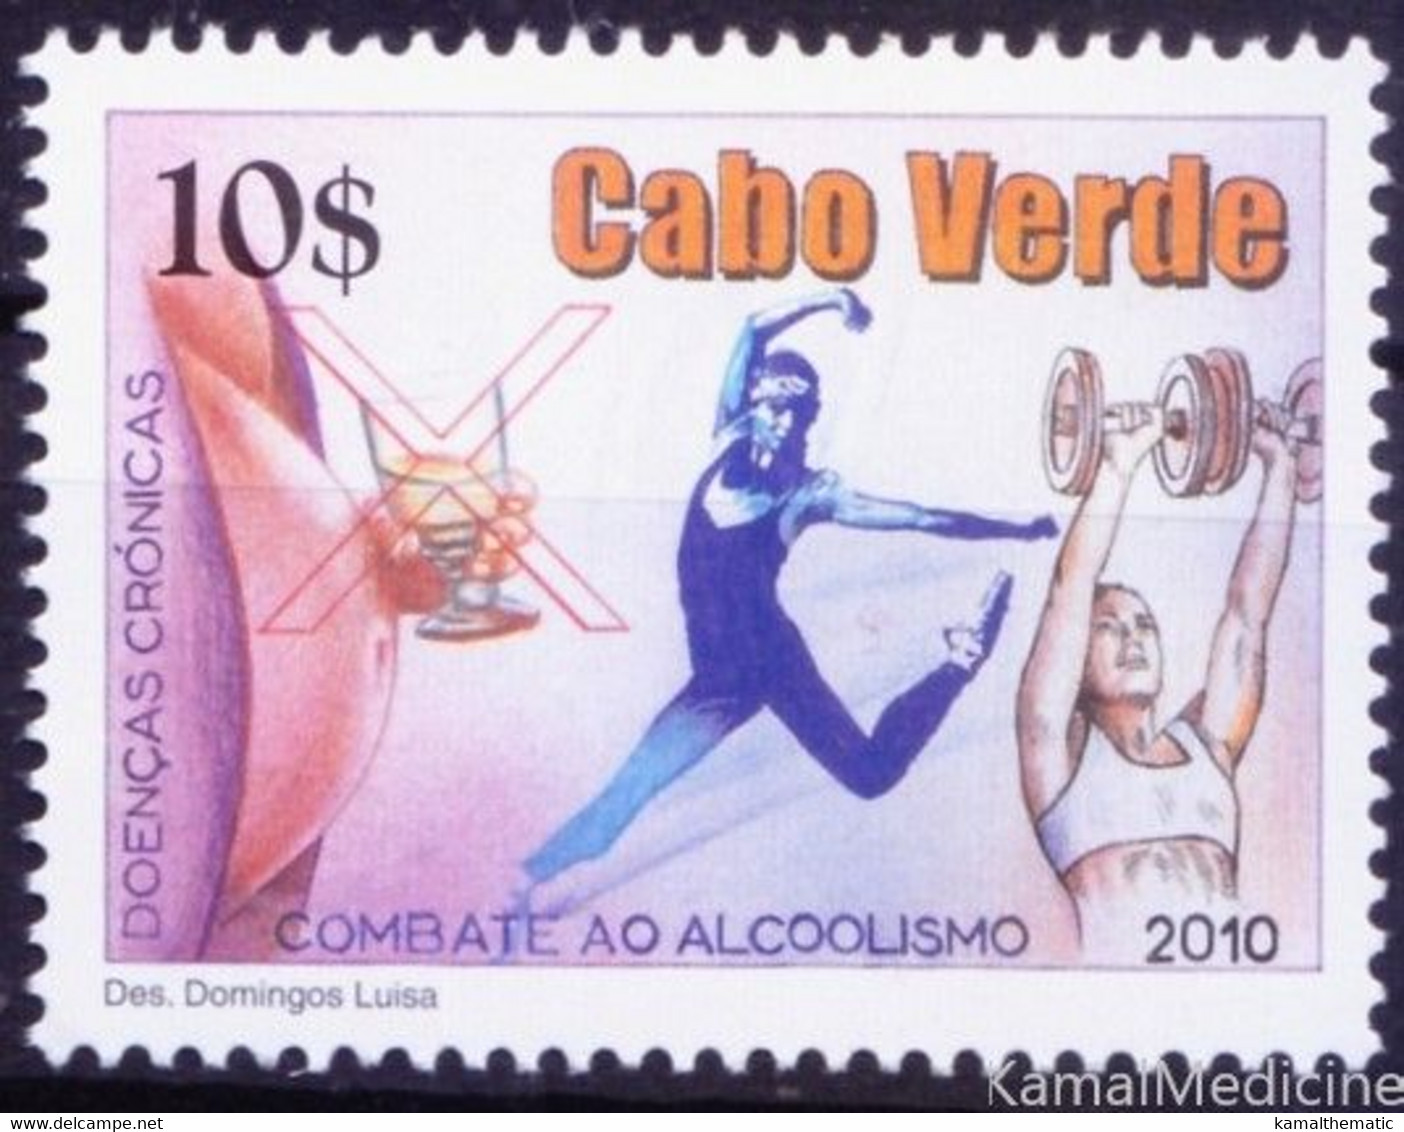 Cape Verde 2010 MNH, Alcoholism, Health, Disease, Exercise - Drugs